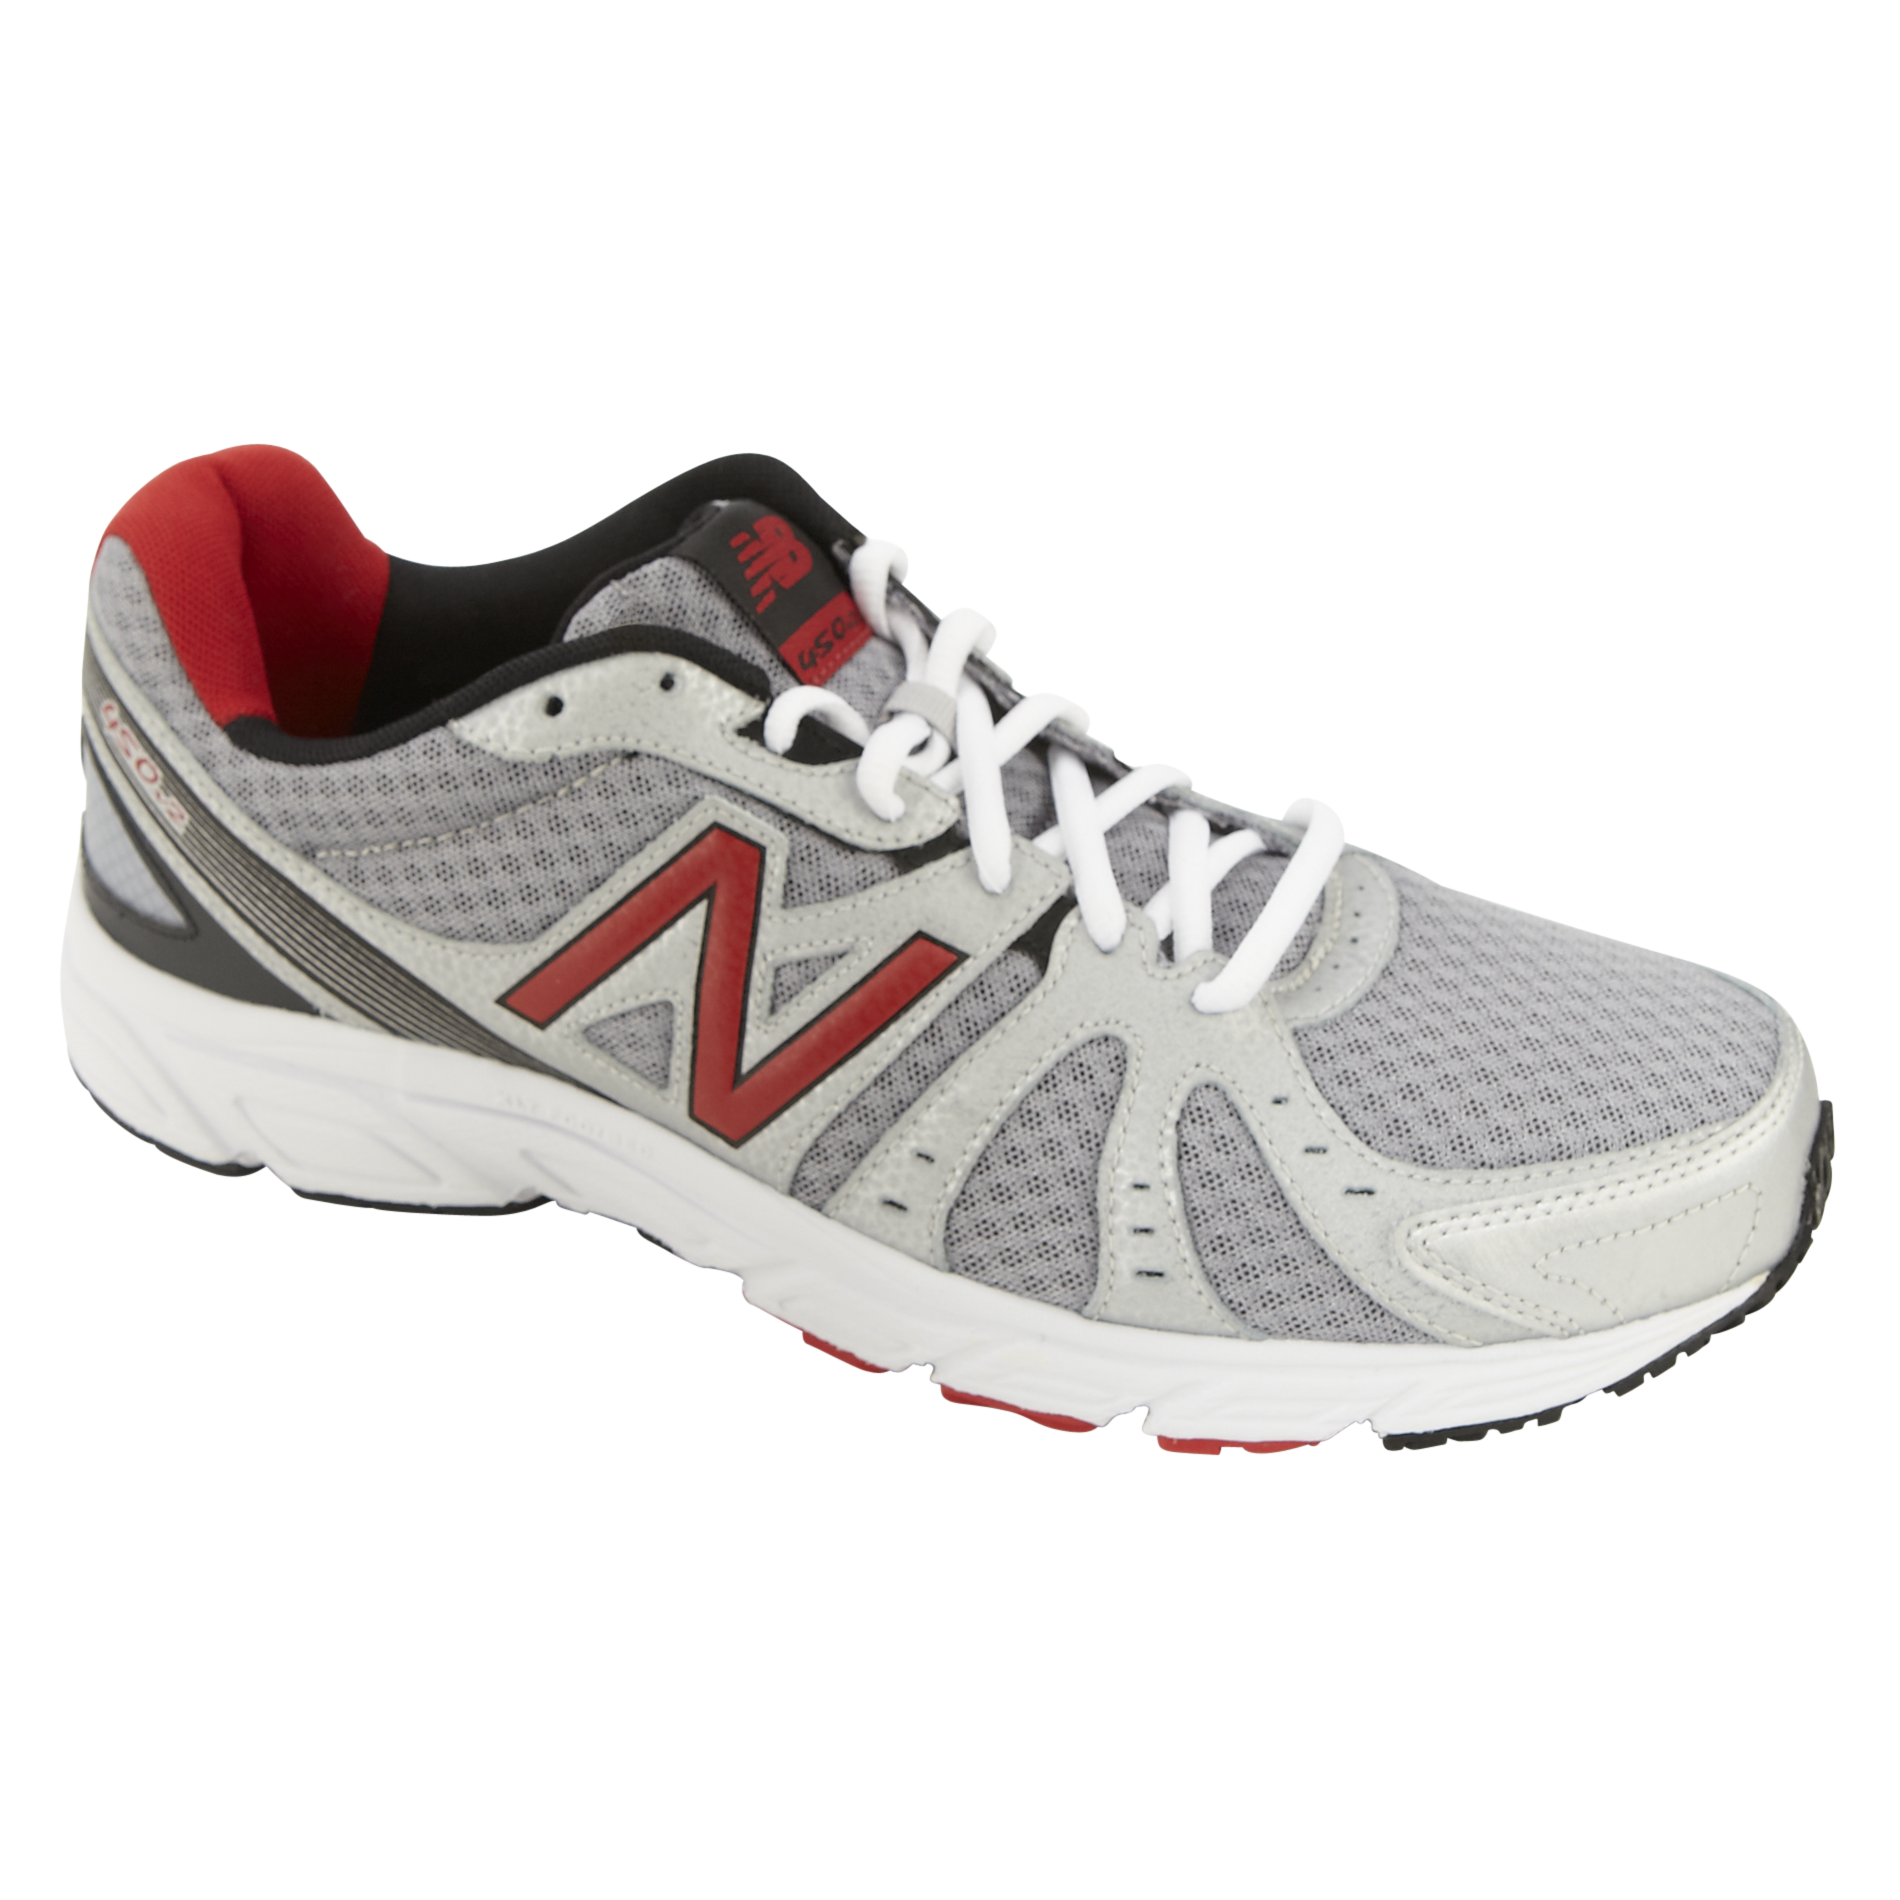 New Balance Men's 450V2 Running Athletic Shoe - White/Grey/Red